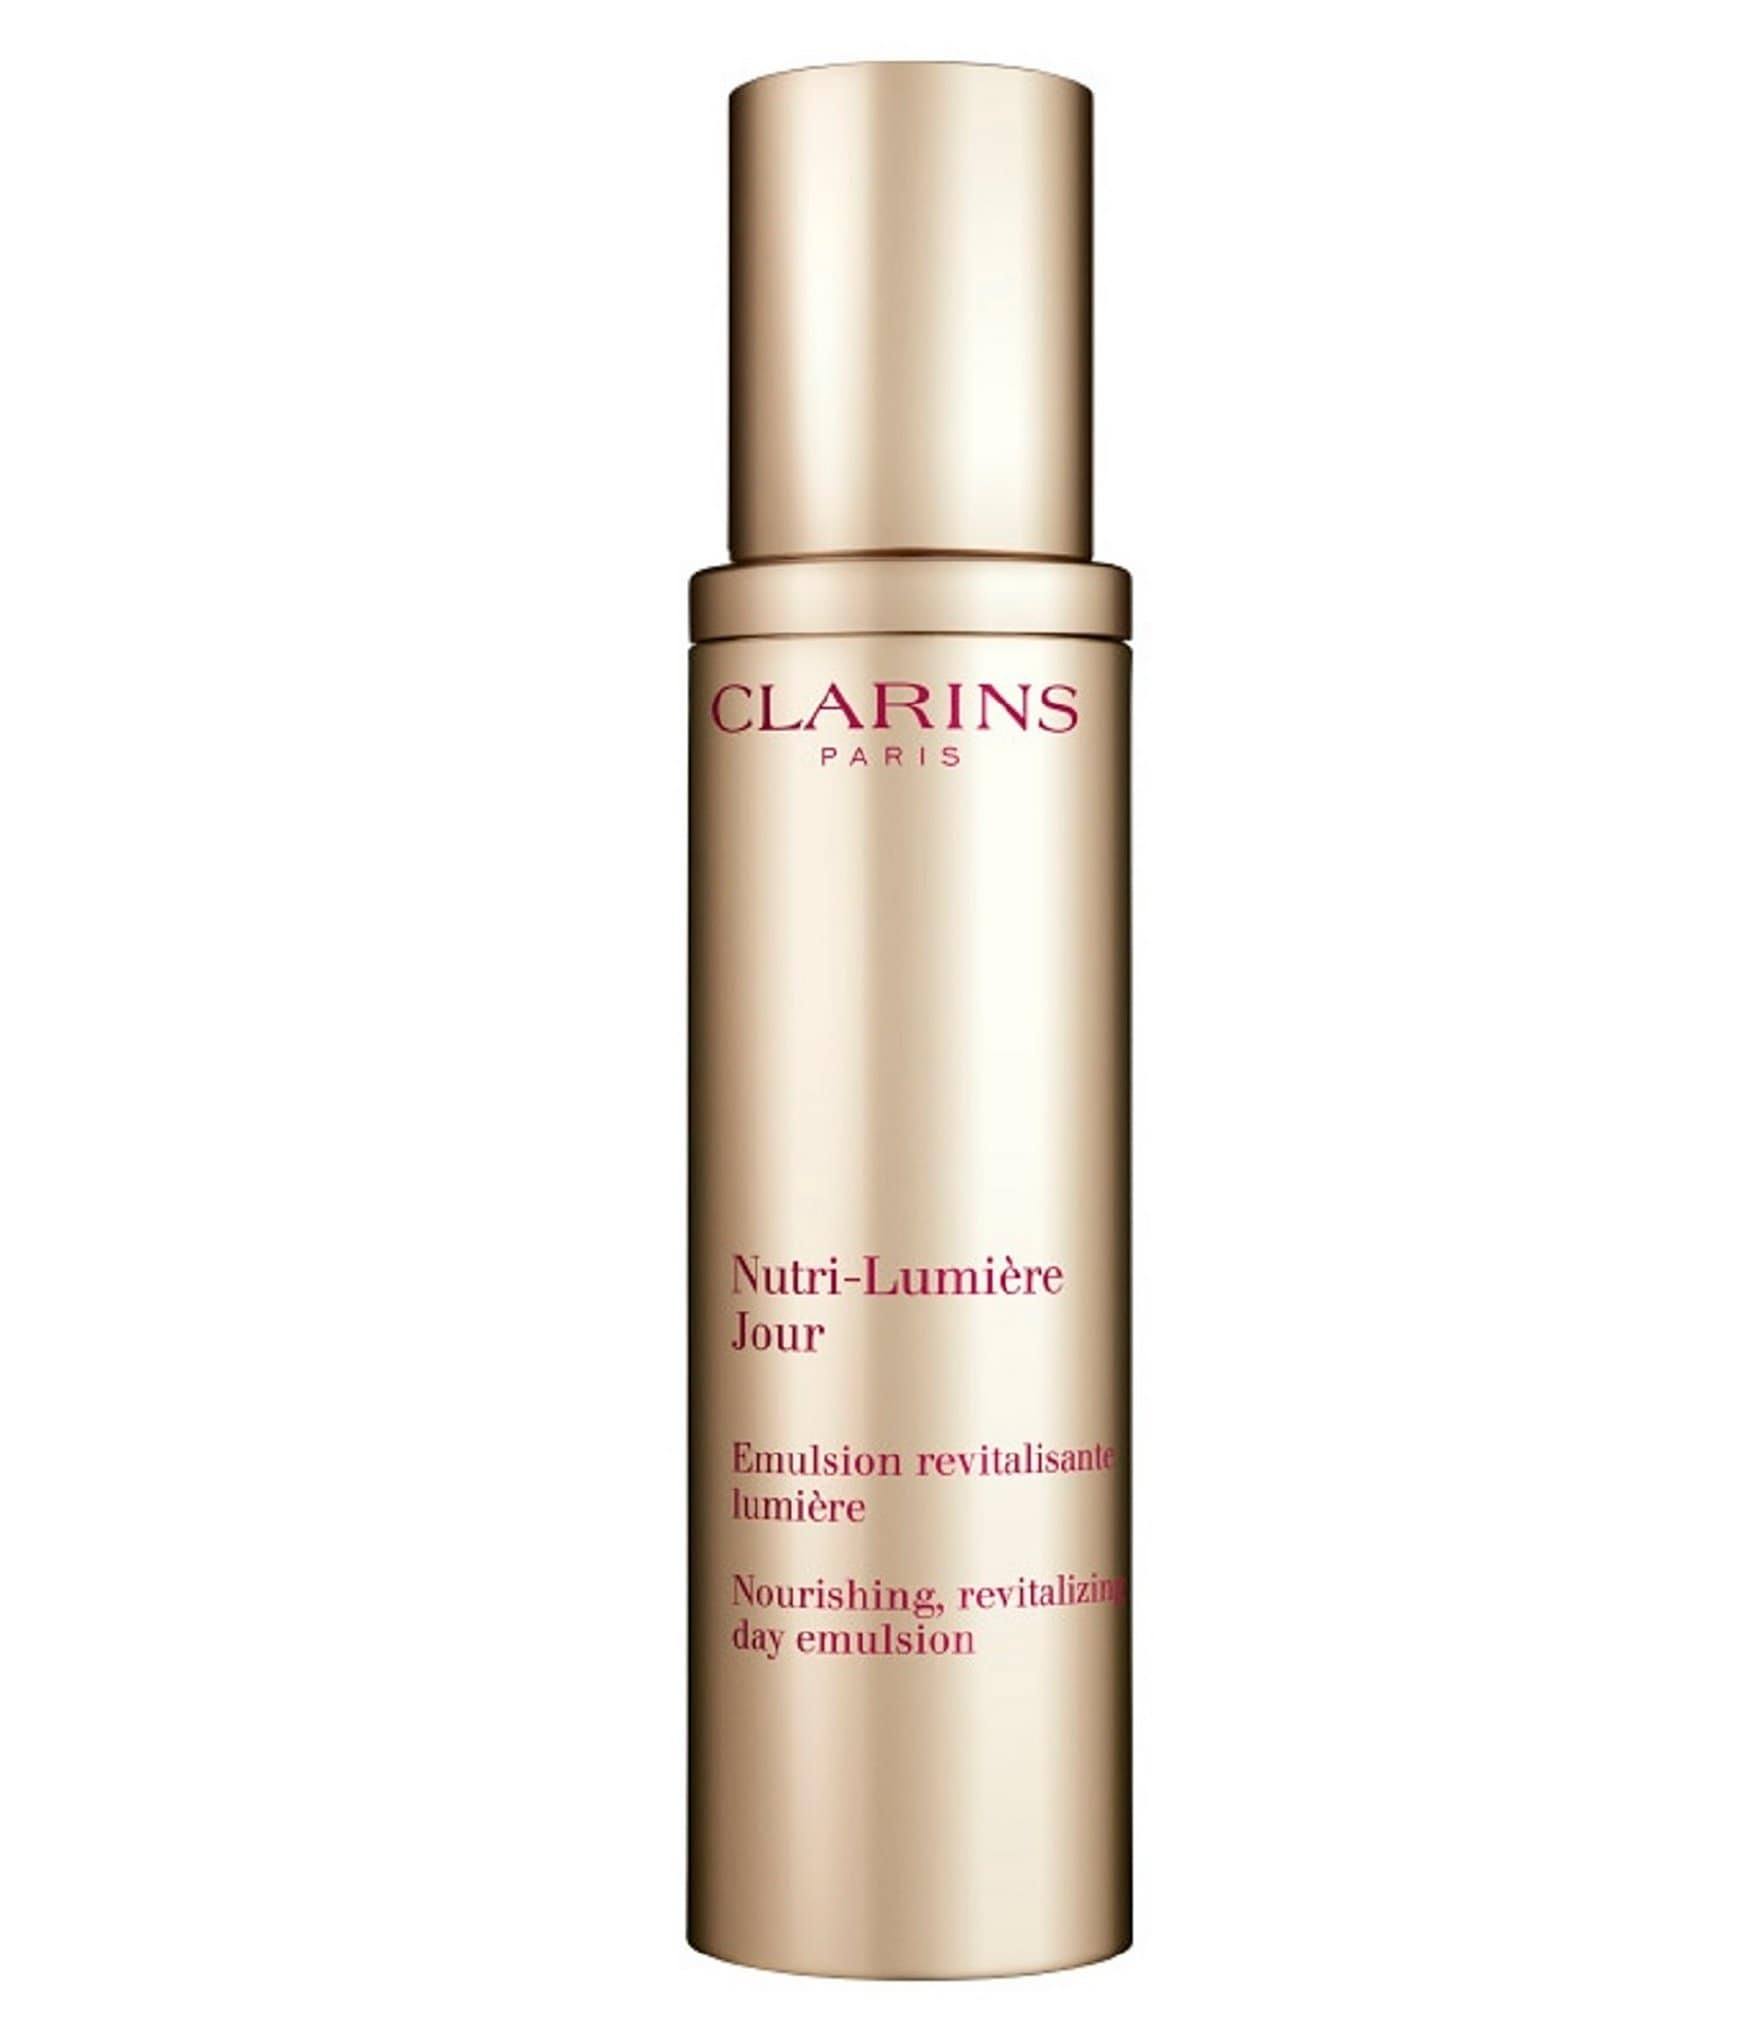 Clarins Nutri-Lumiere Jour Revitalizing Day Emulsion 1.6oz / 50ml